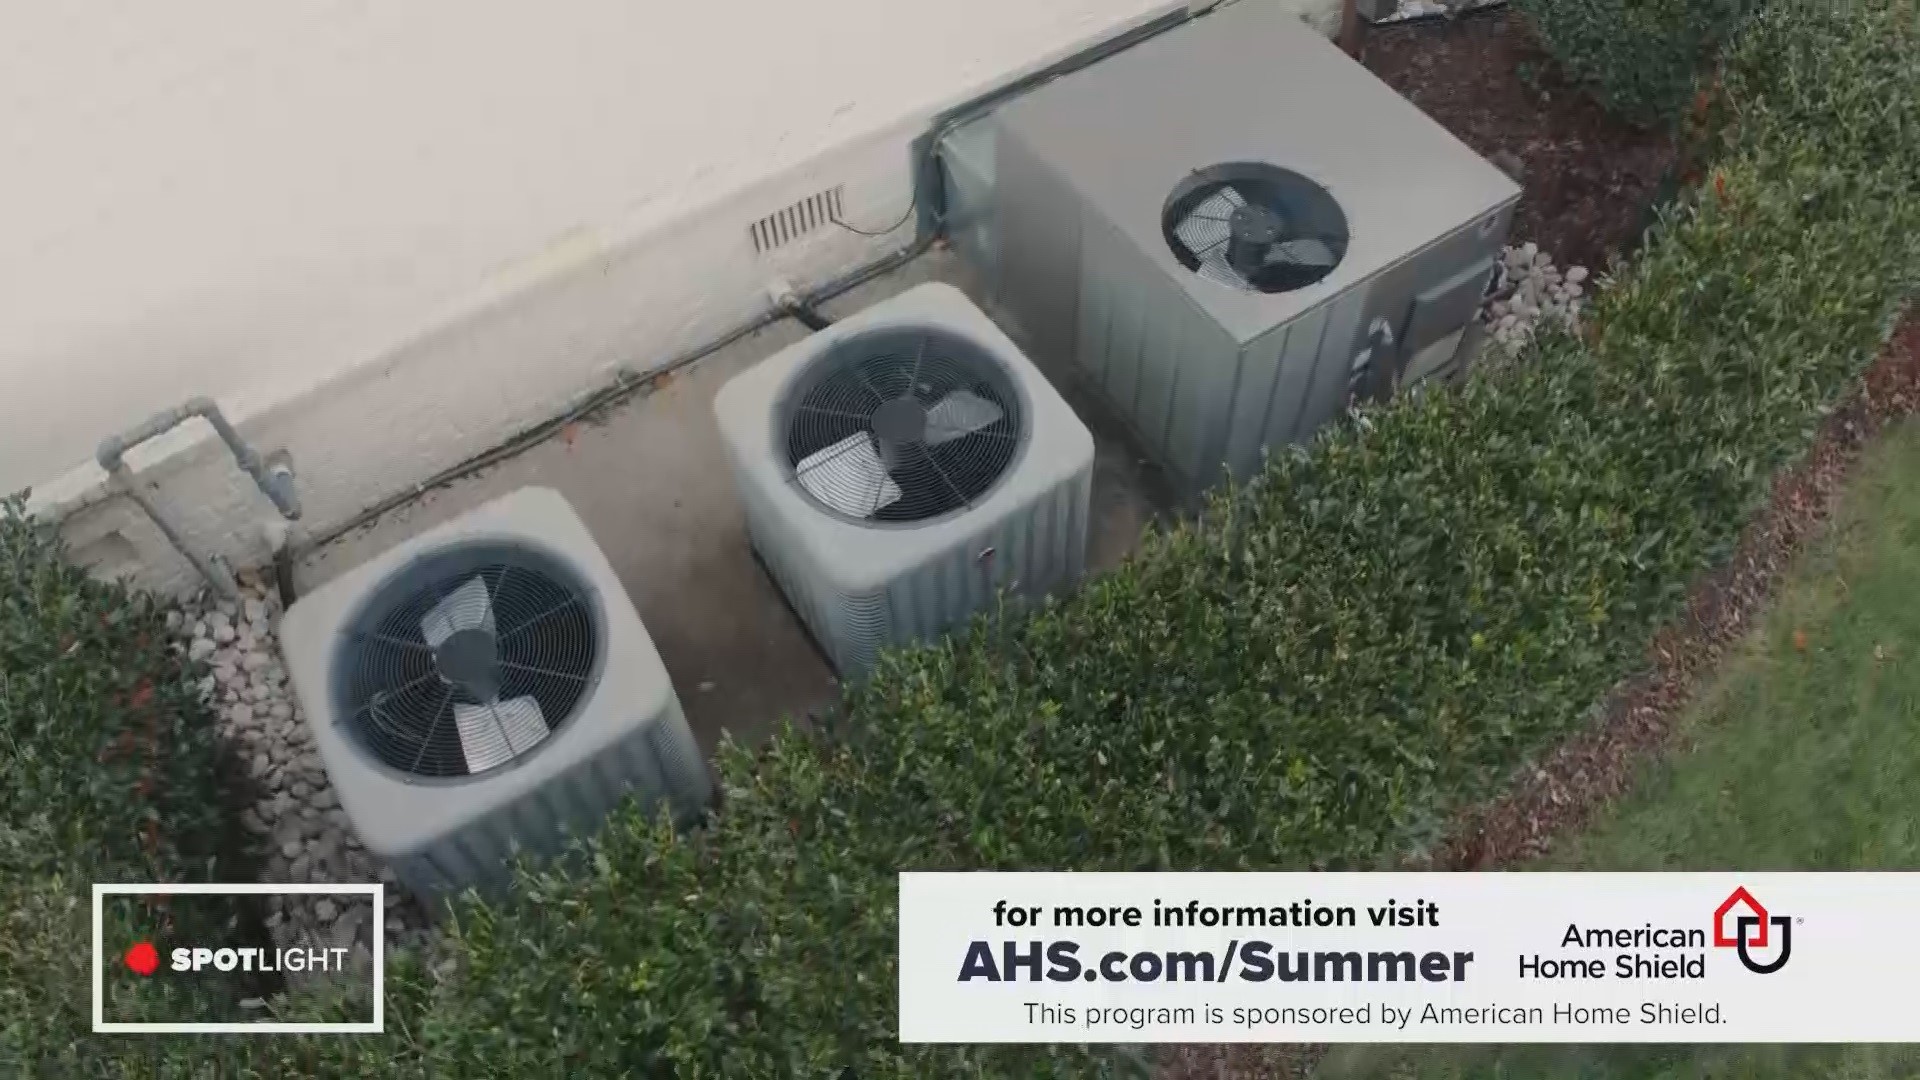 Visit AHS.com/Summer to download your FREE Summer checklist